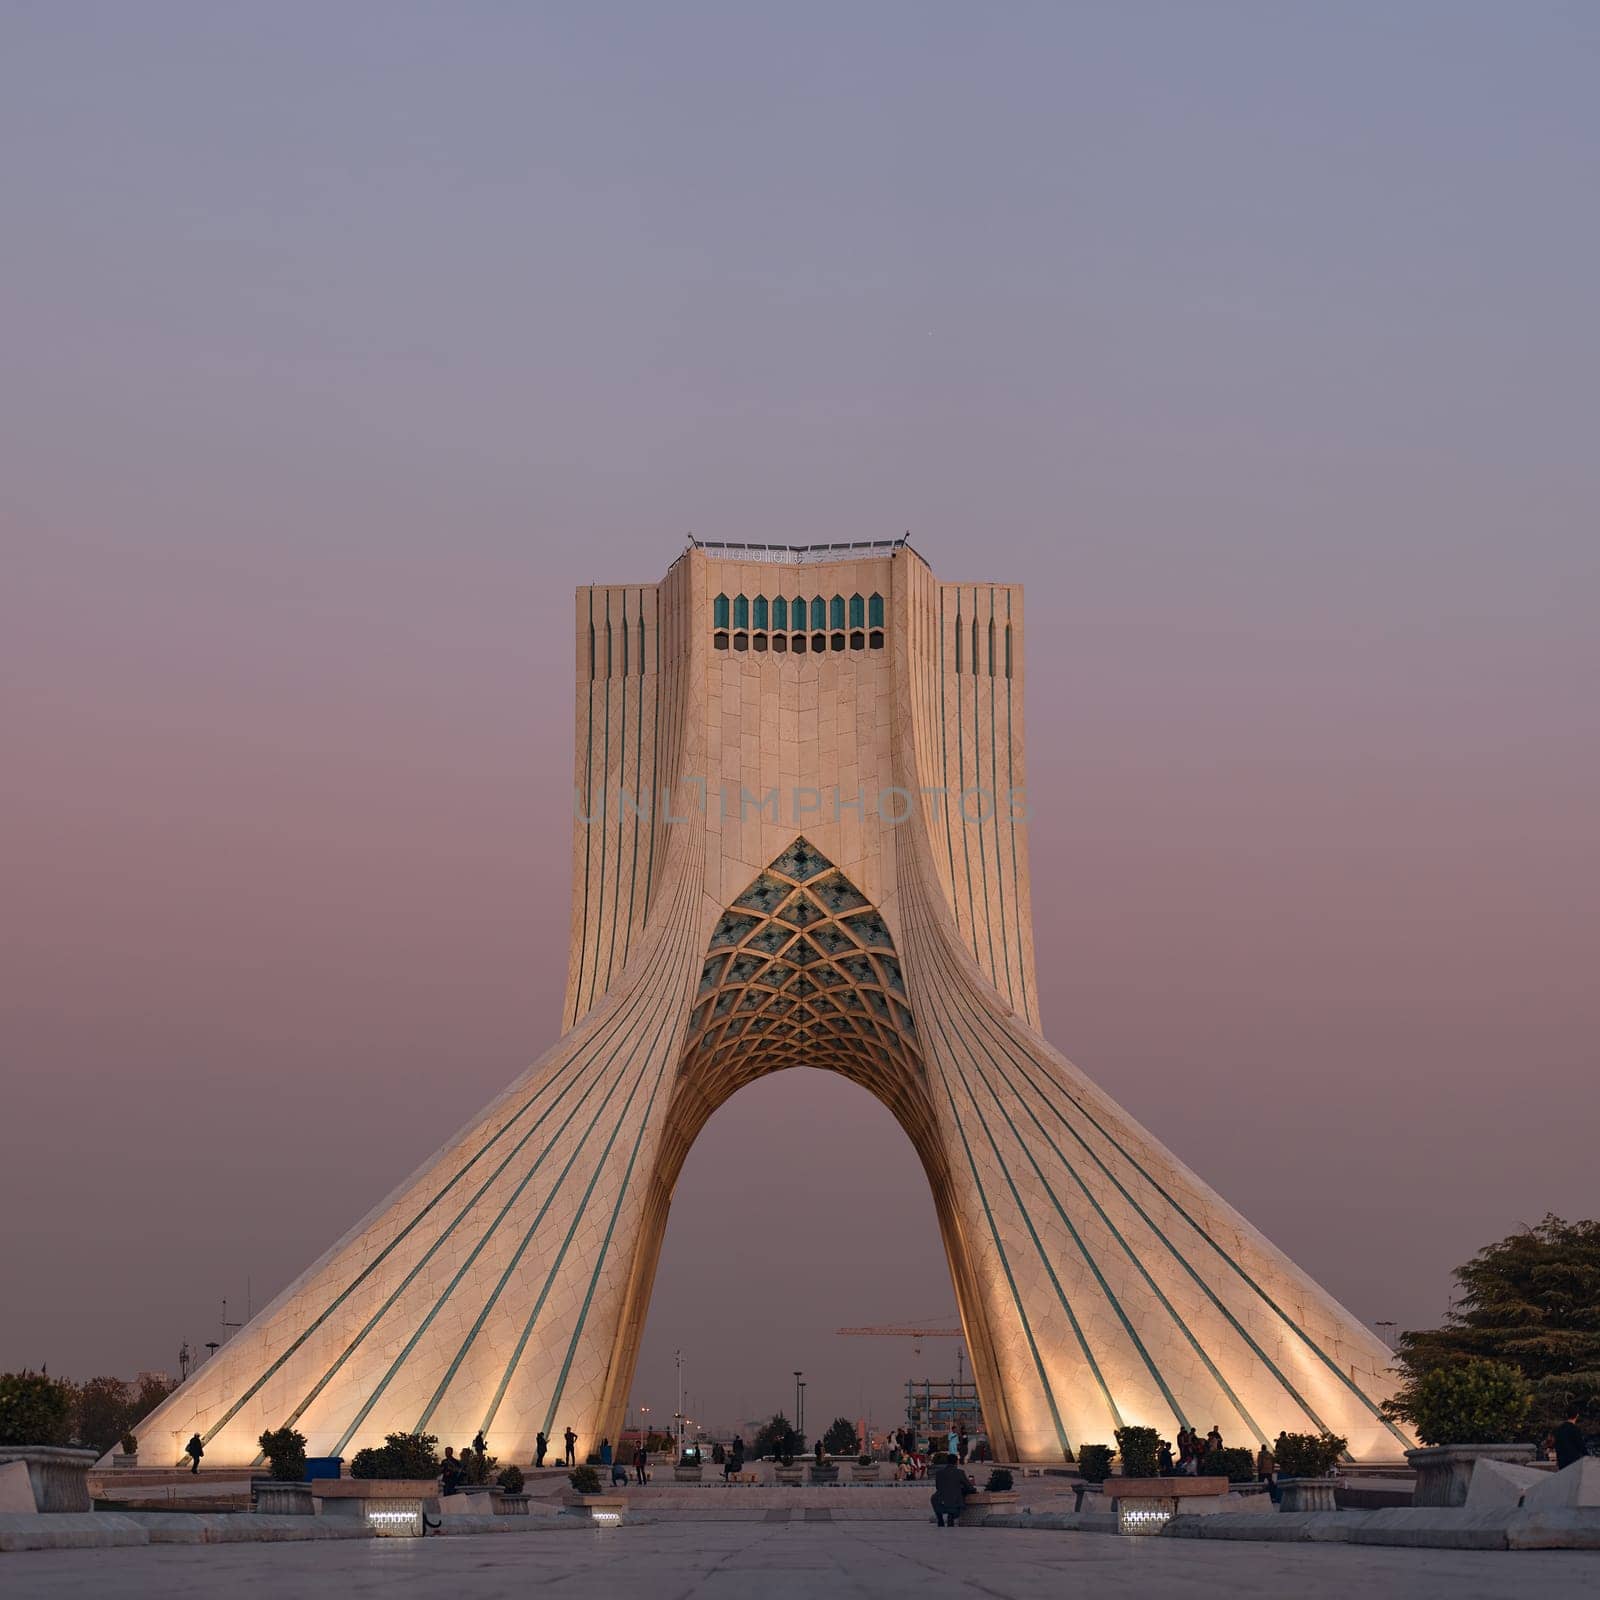 The Azadi Tower is a symbol of freedom in Iran, the main symbol of Iran's capital. MS ZI LA Azadi Tower - Freedom Tower, the gateway to Tehran, Popular tourist point at twilight. 02.12.22 Tehran, Iran by EvgeniyQW